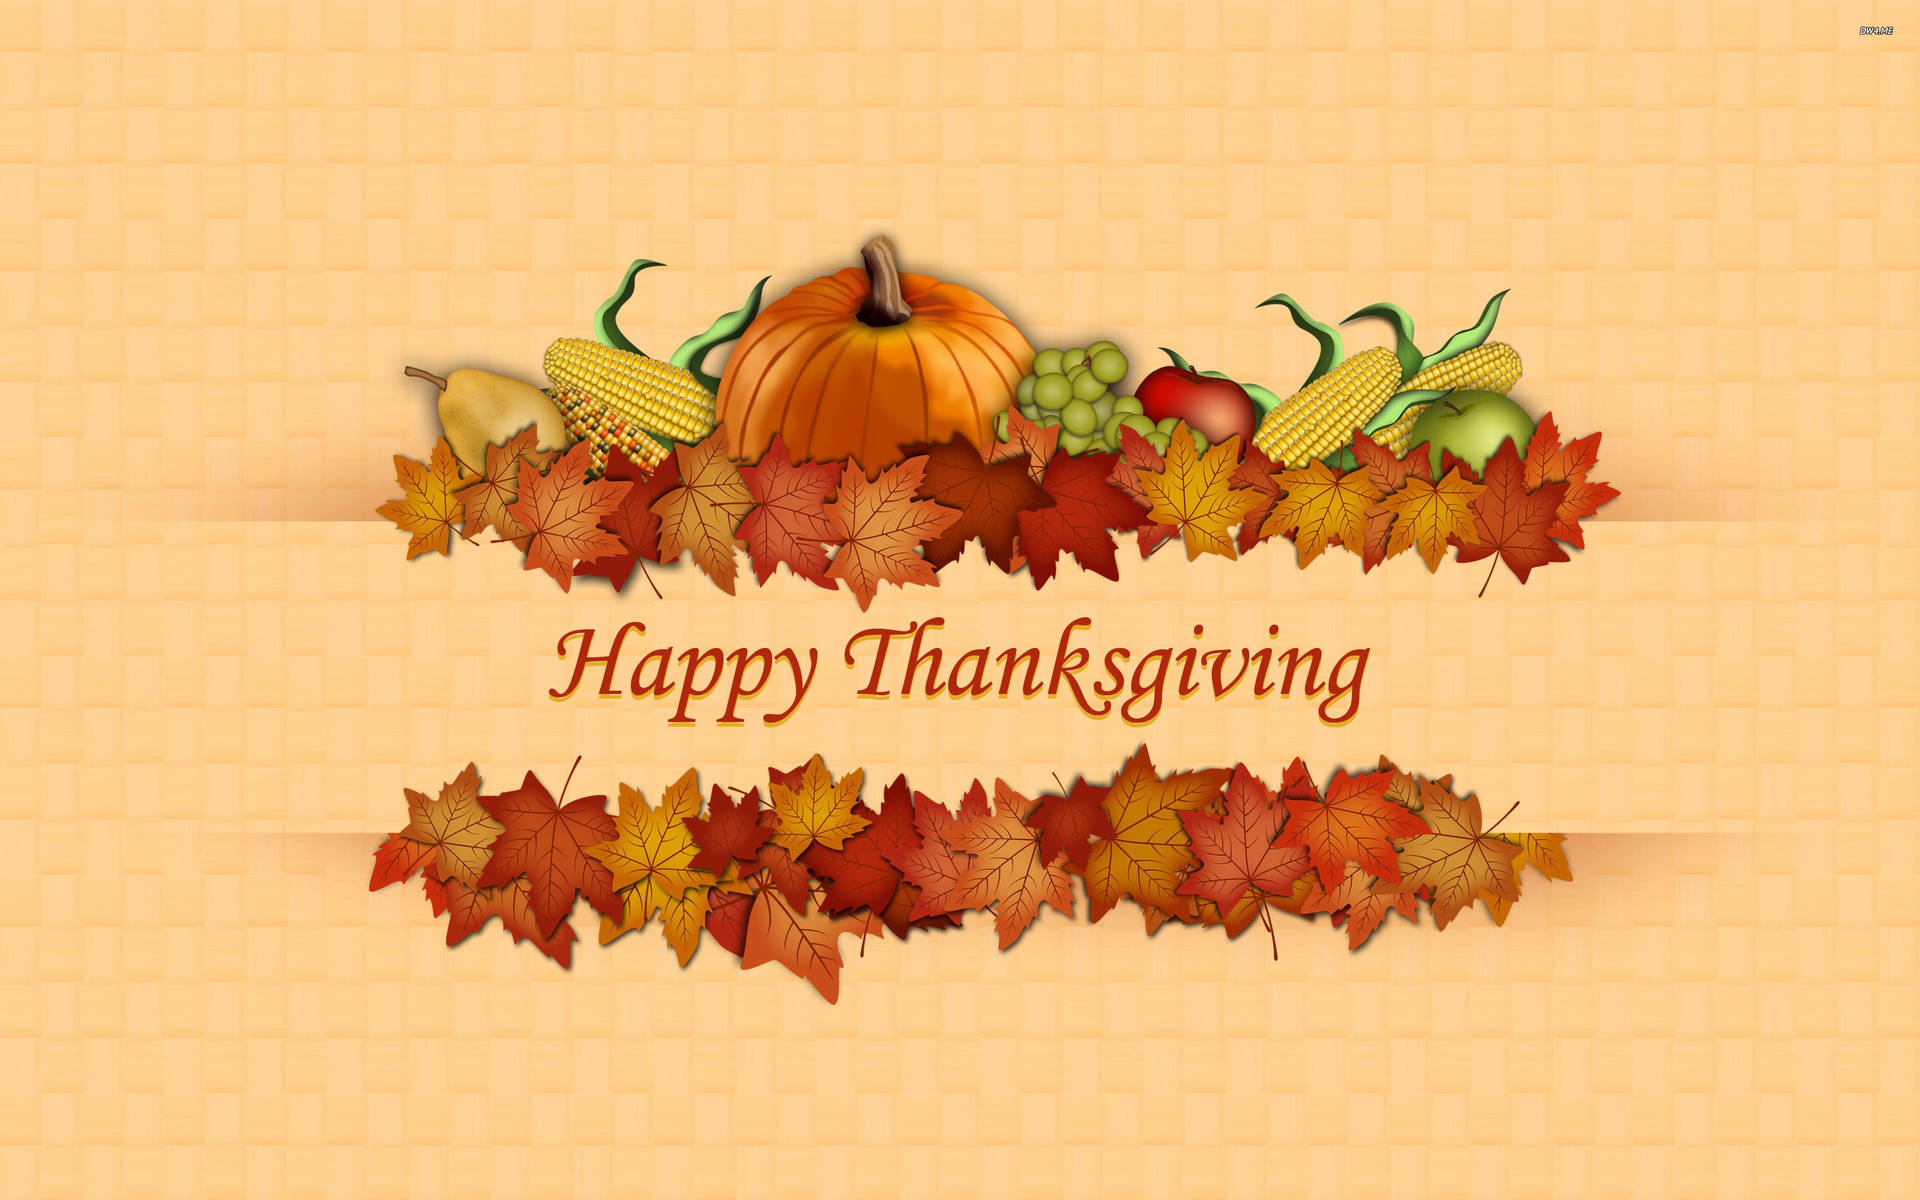 Thanksgiving Digital Greeting Card Background